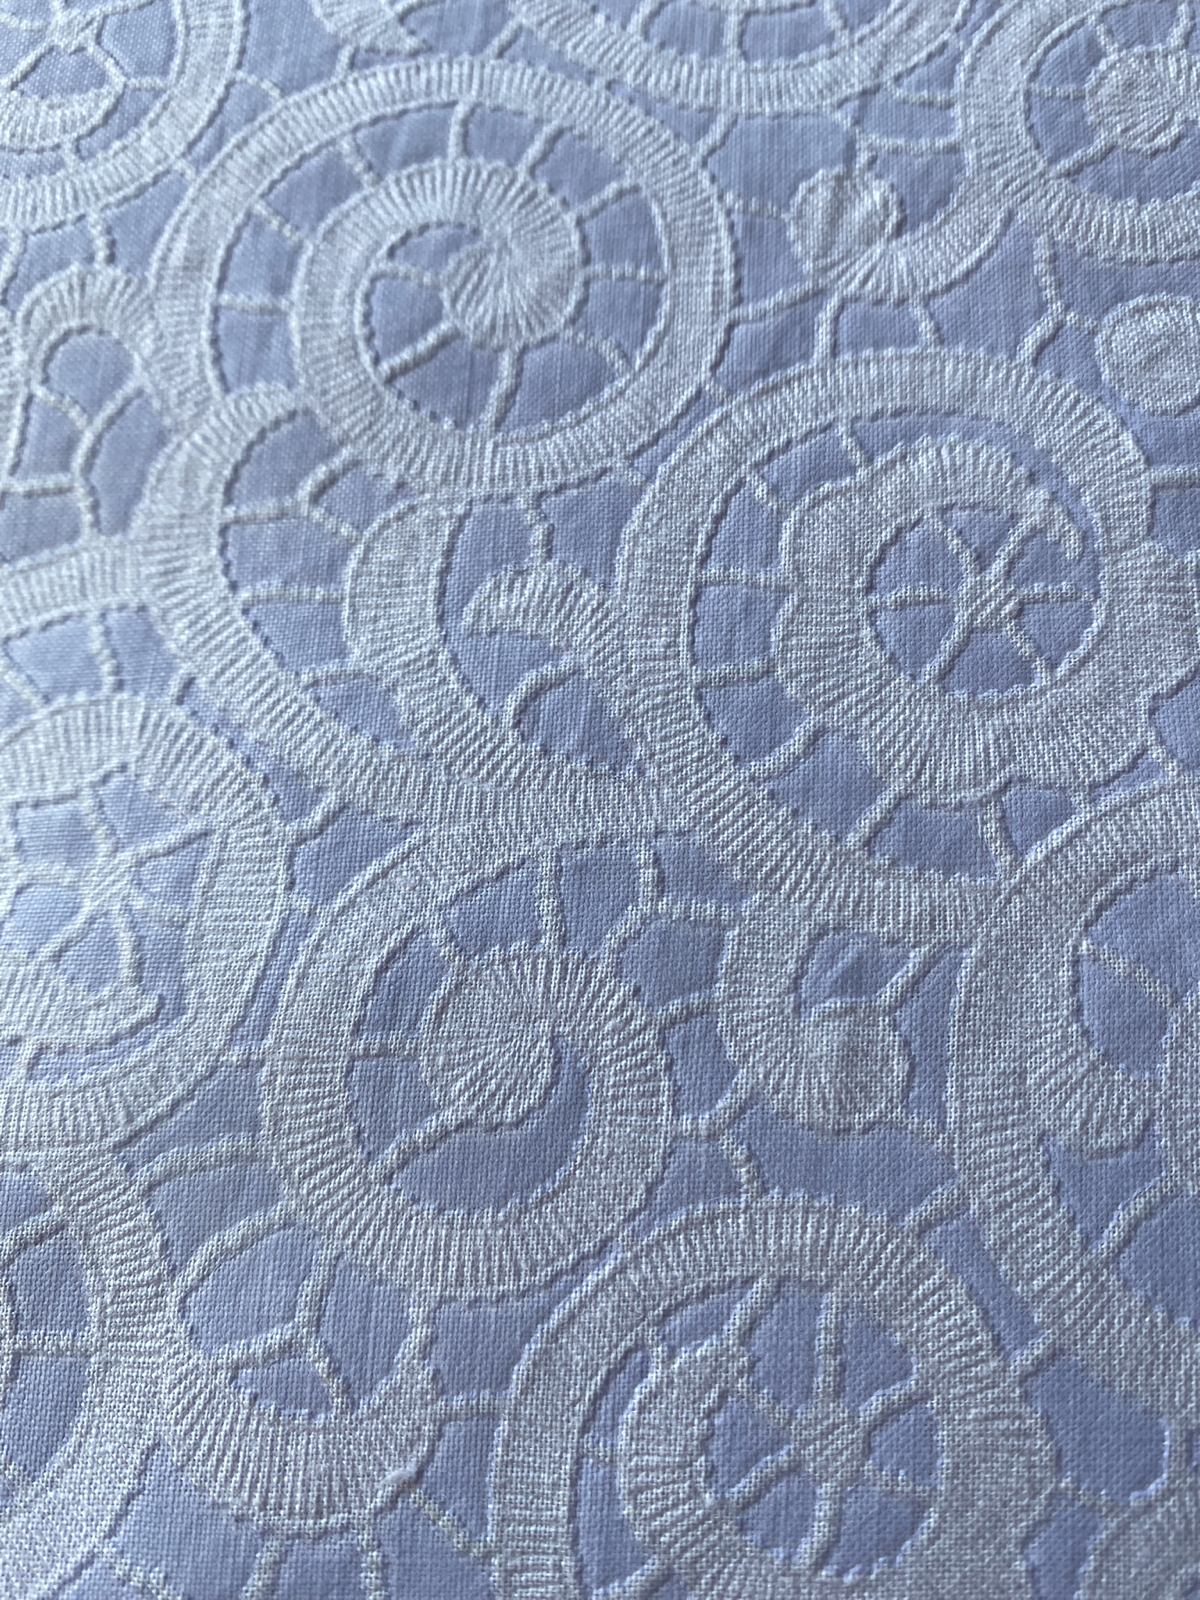 1950s-1960s Embossed Faux Tape Lace Lavender Cotton